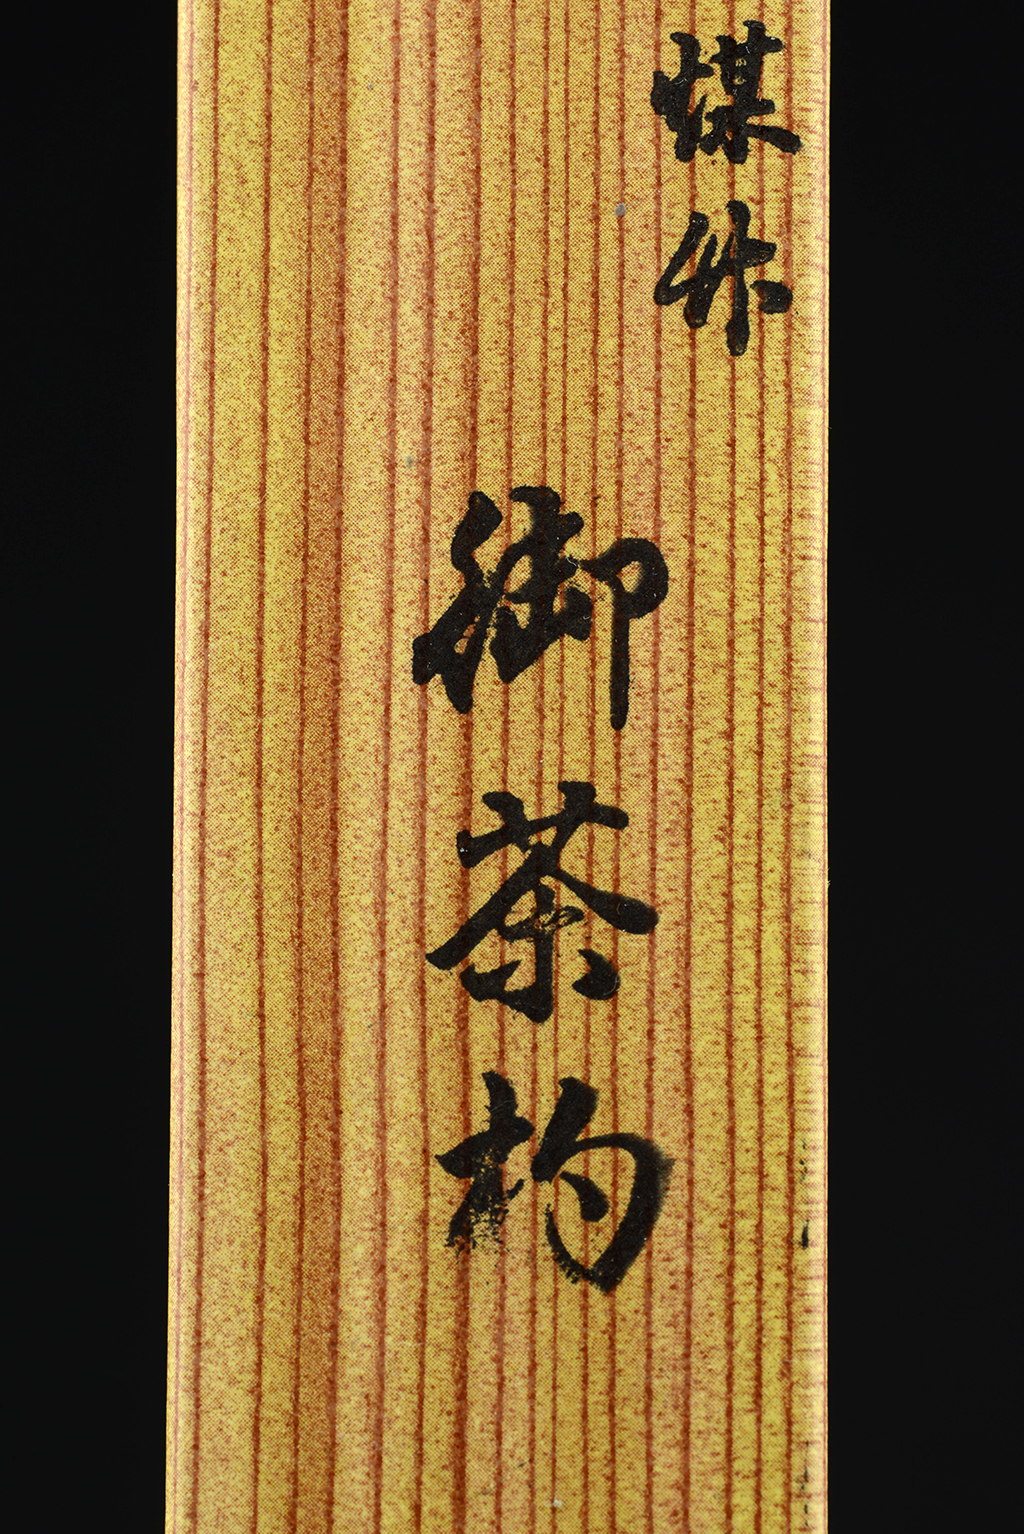 Susudake fekete bambusz chashaku  matcha teaszedő